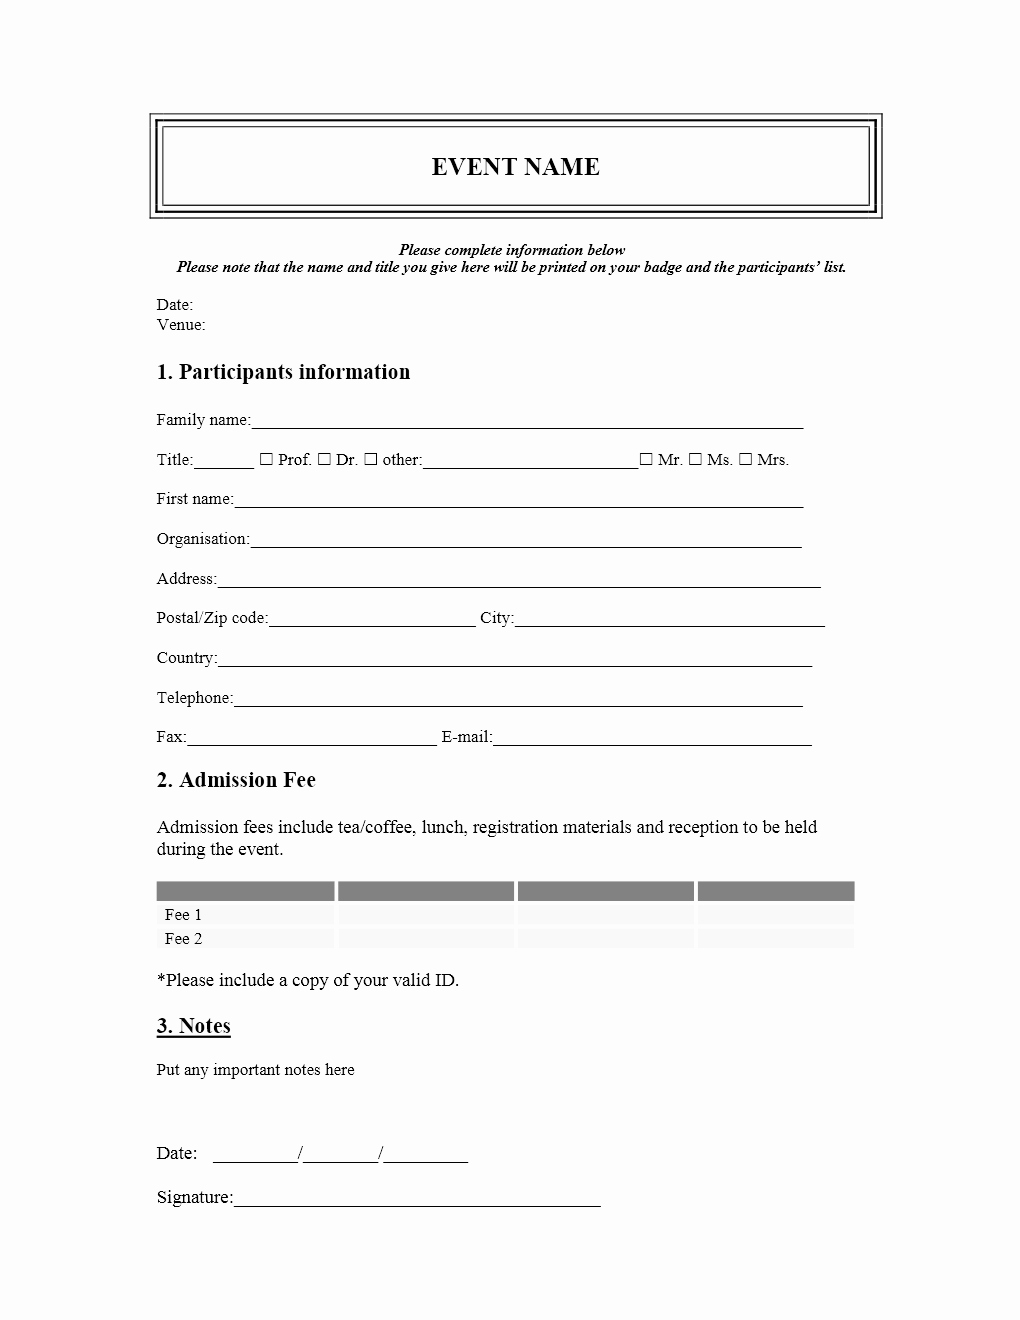 Registration forms Template Word Unique event Registration form